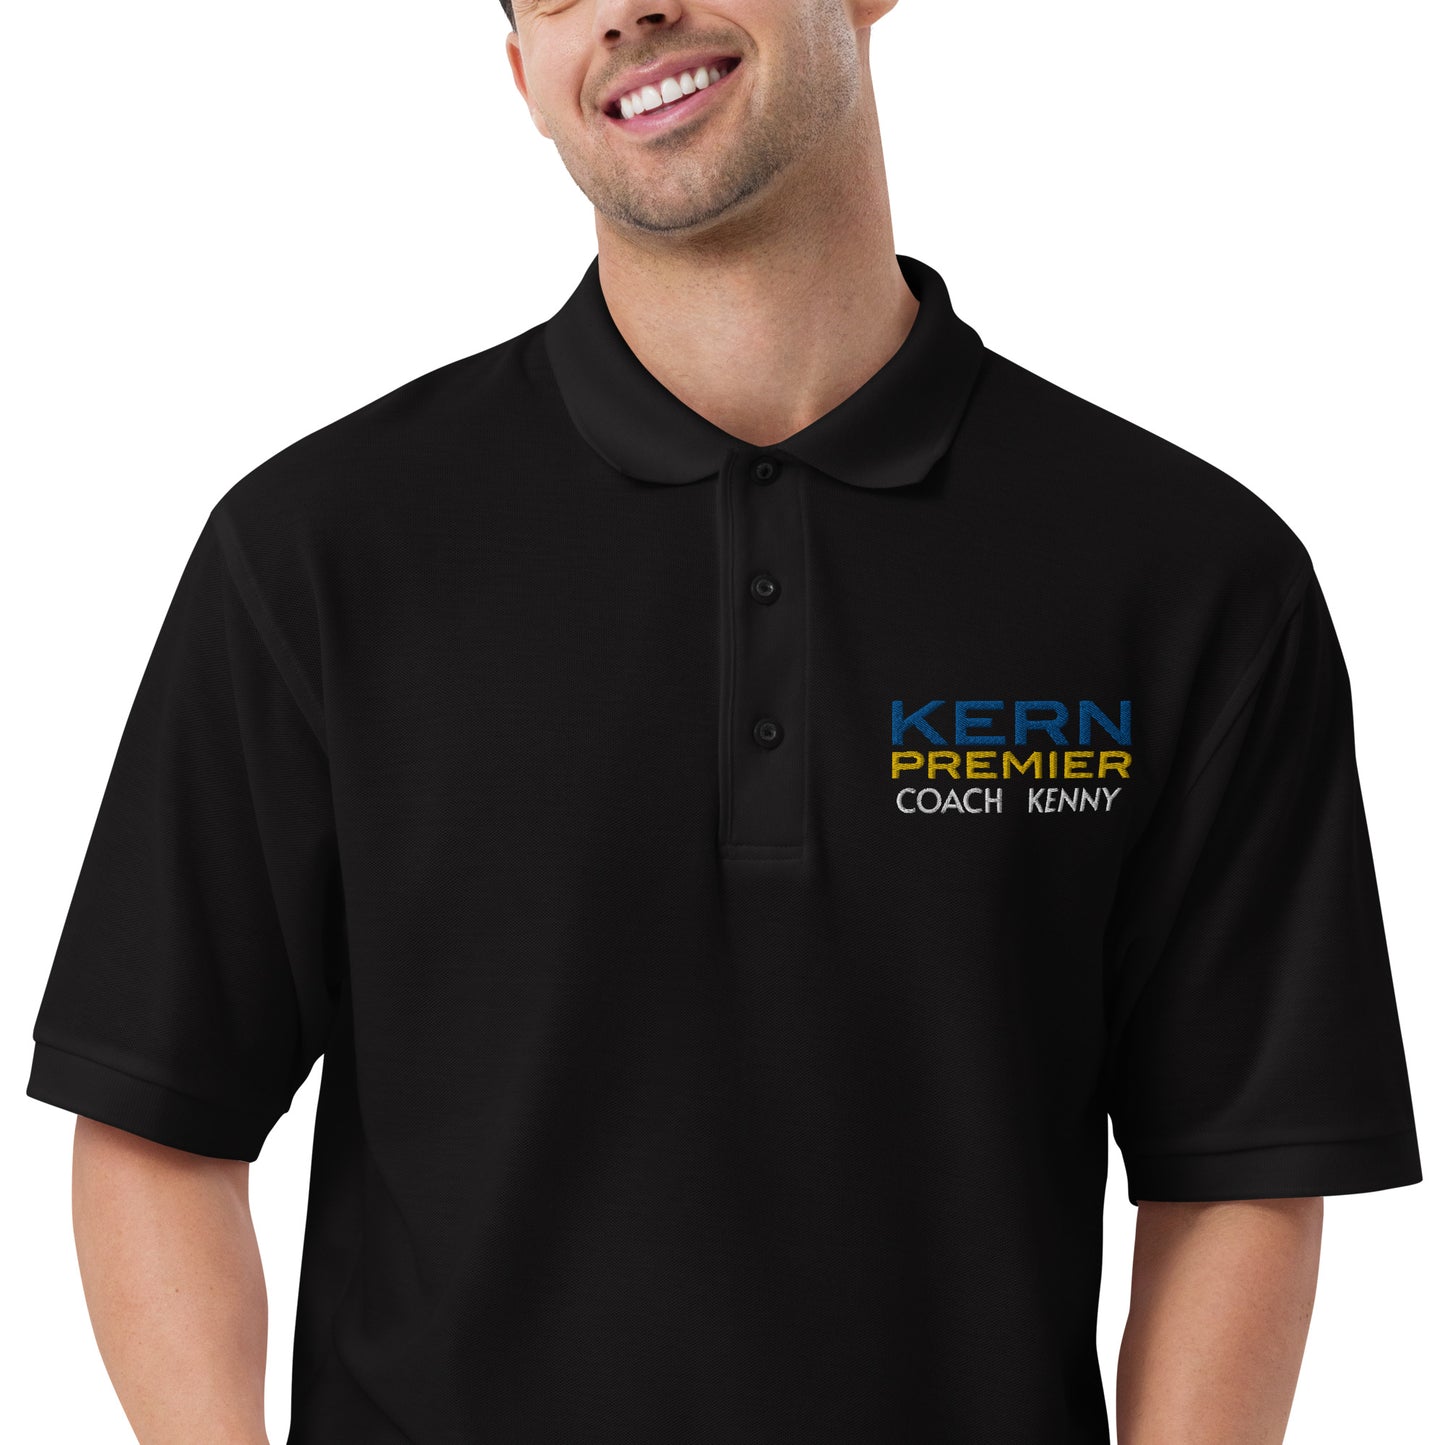 KP Logo - Coach Kenny - Premium Polo